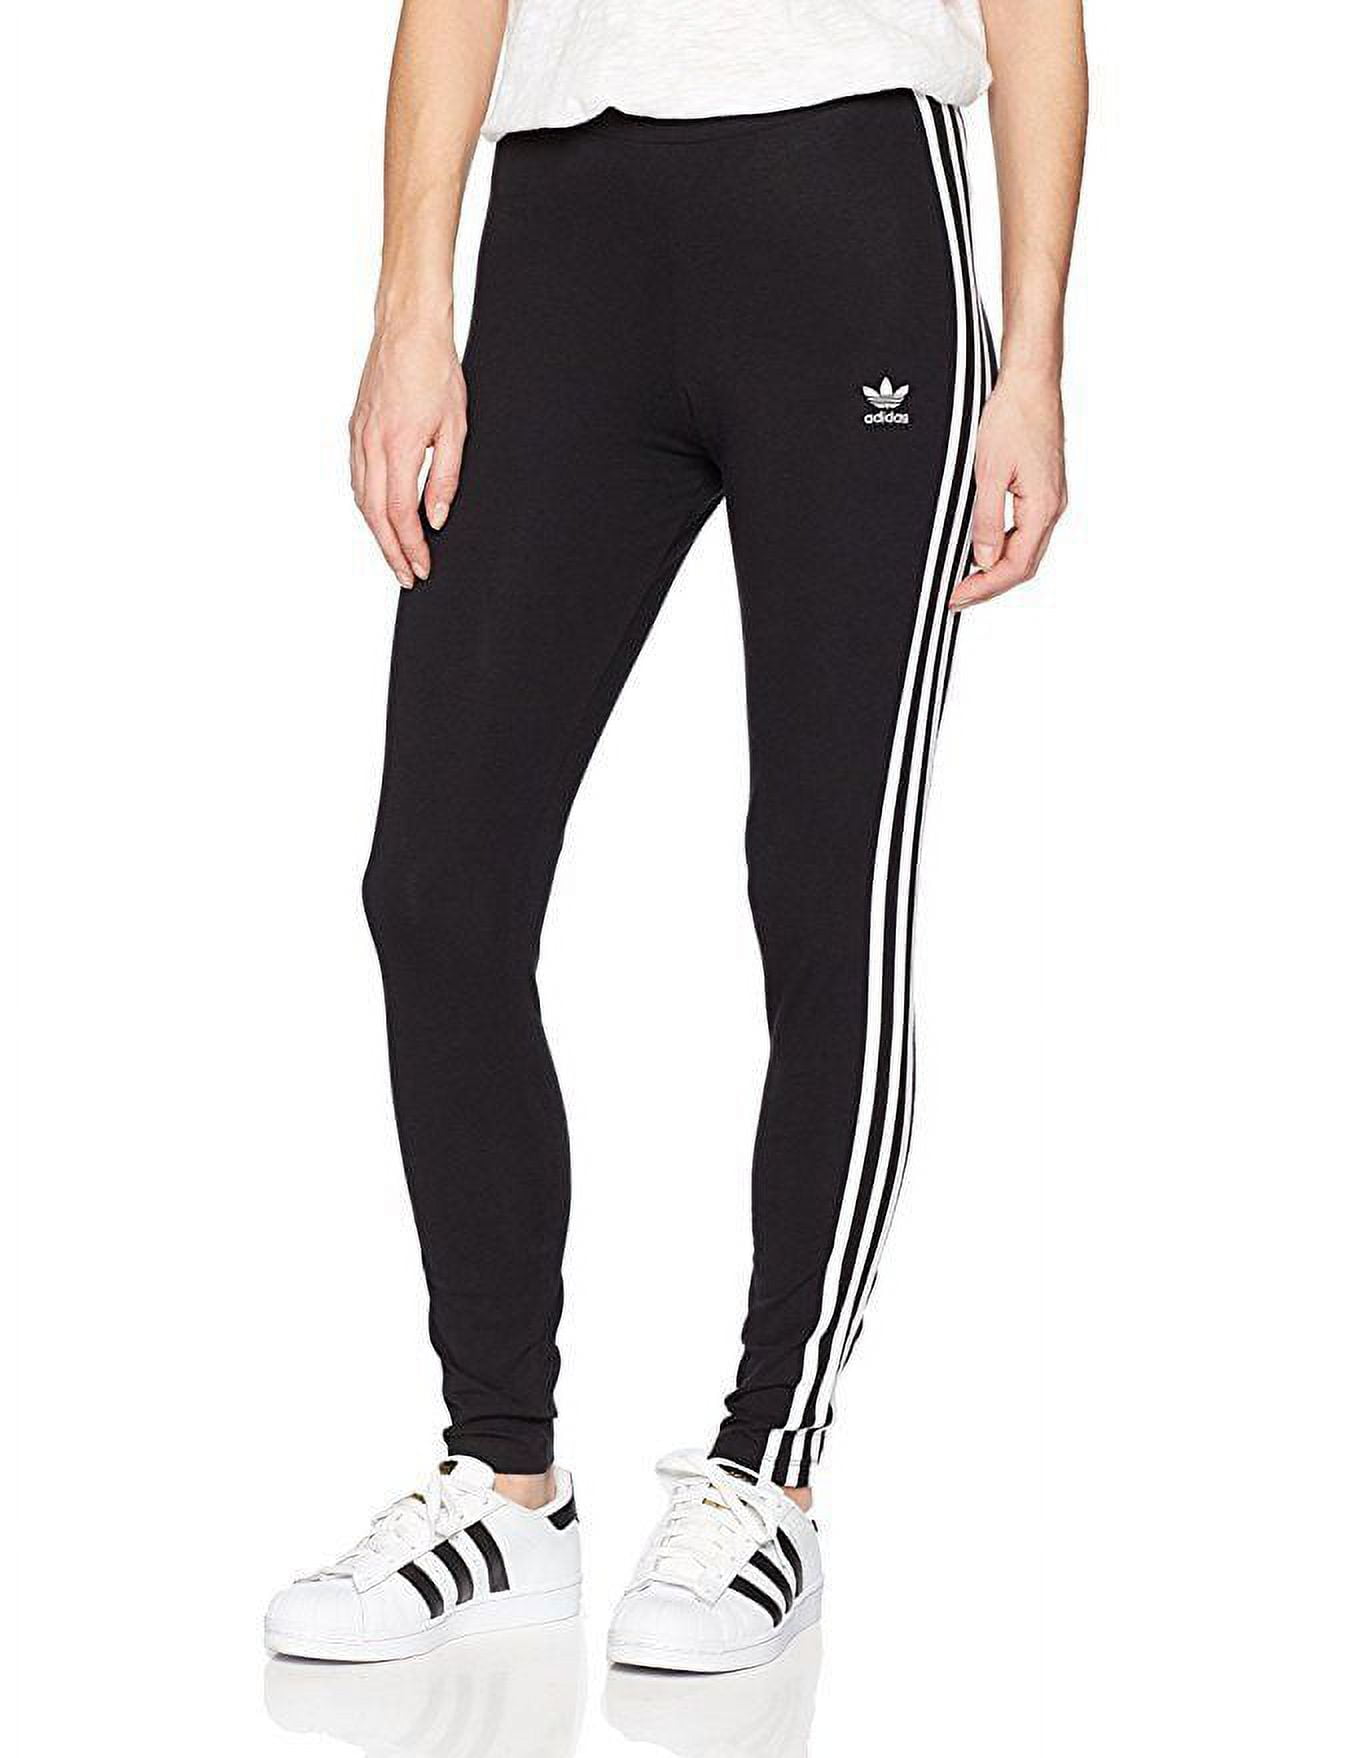 Adidas Essentials 3-Stripes Womens Leggings - Black/White | Sportitude